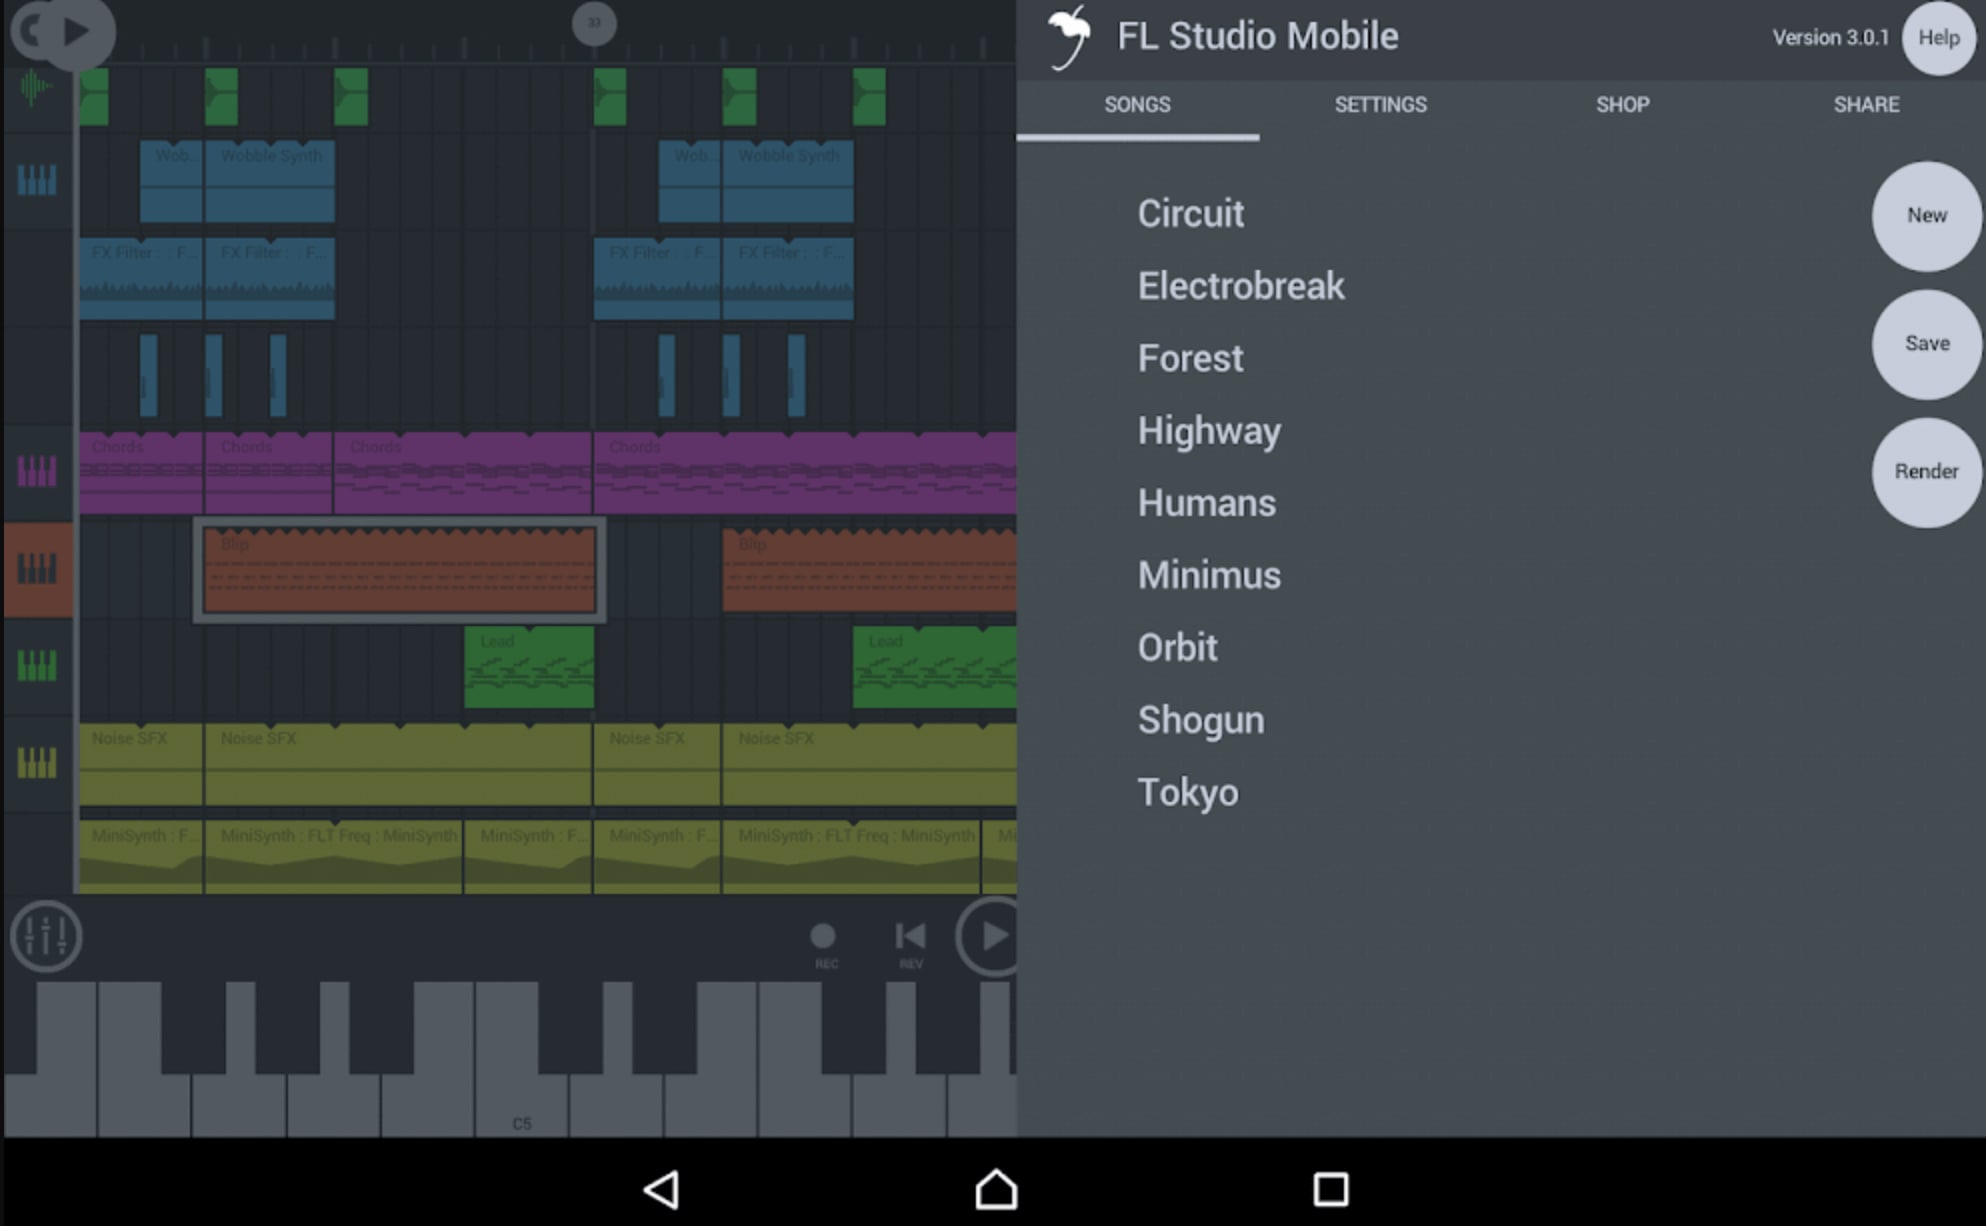 audio editor for Android - FL Studio Mobile 